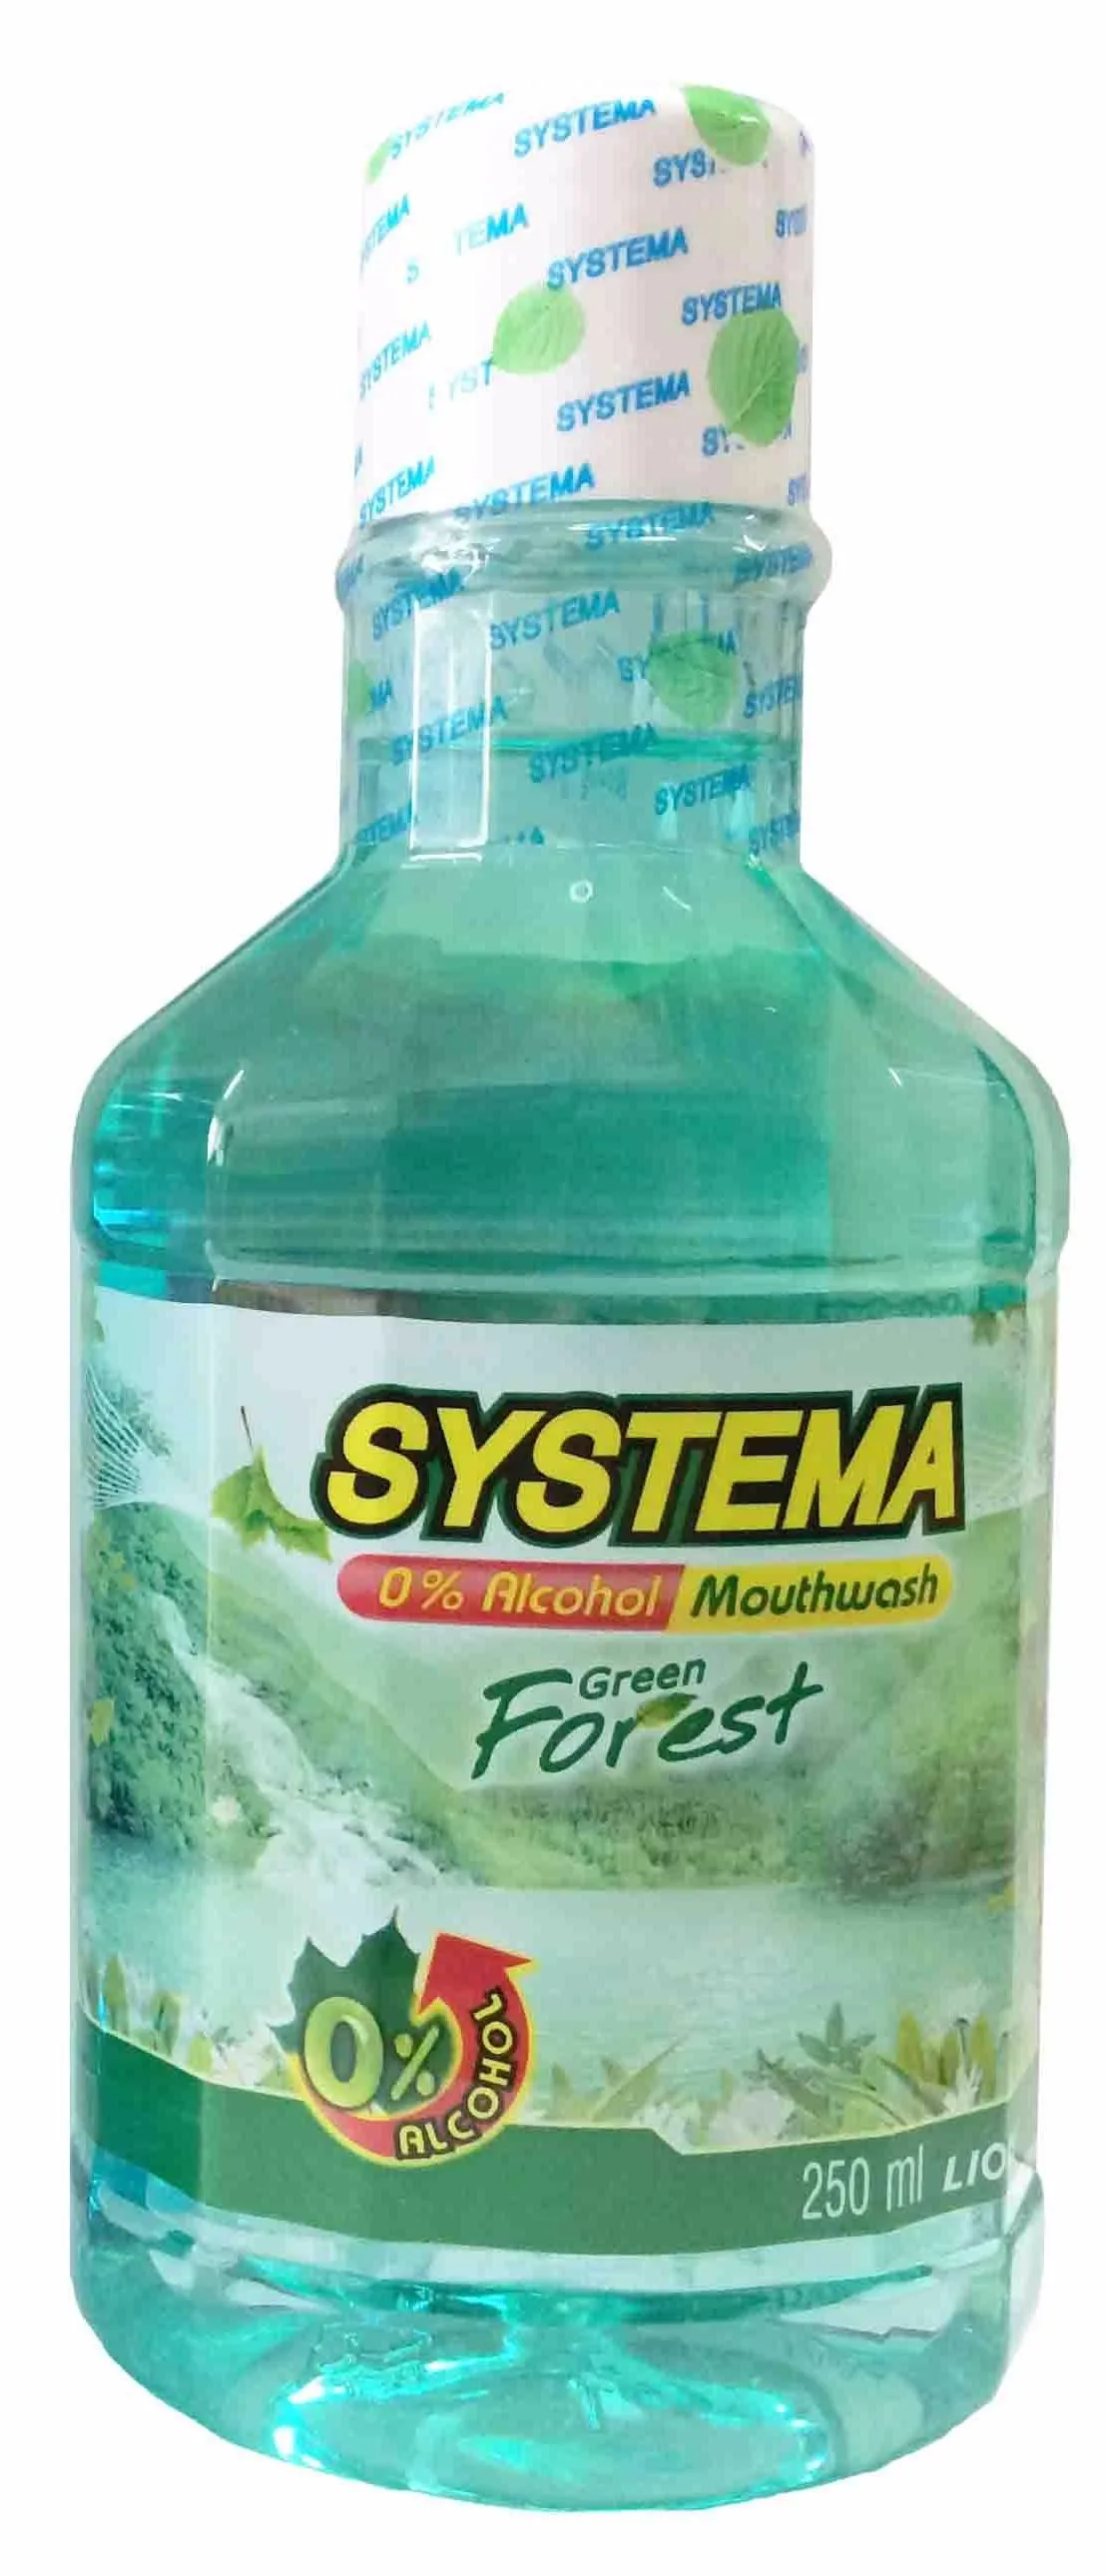 Lion Thai Systema Advanced Gum Care System Mouthwash Green Forest Ополаскиватель для полости рта Зеленый лес 250мл